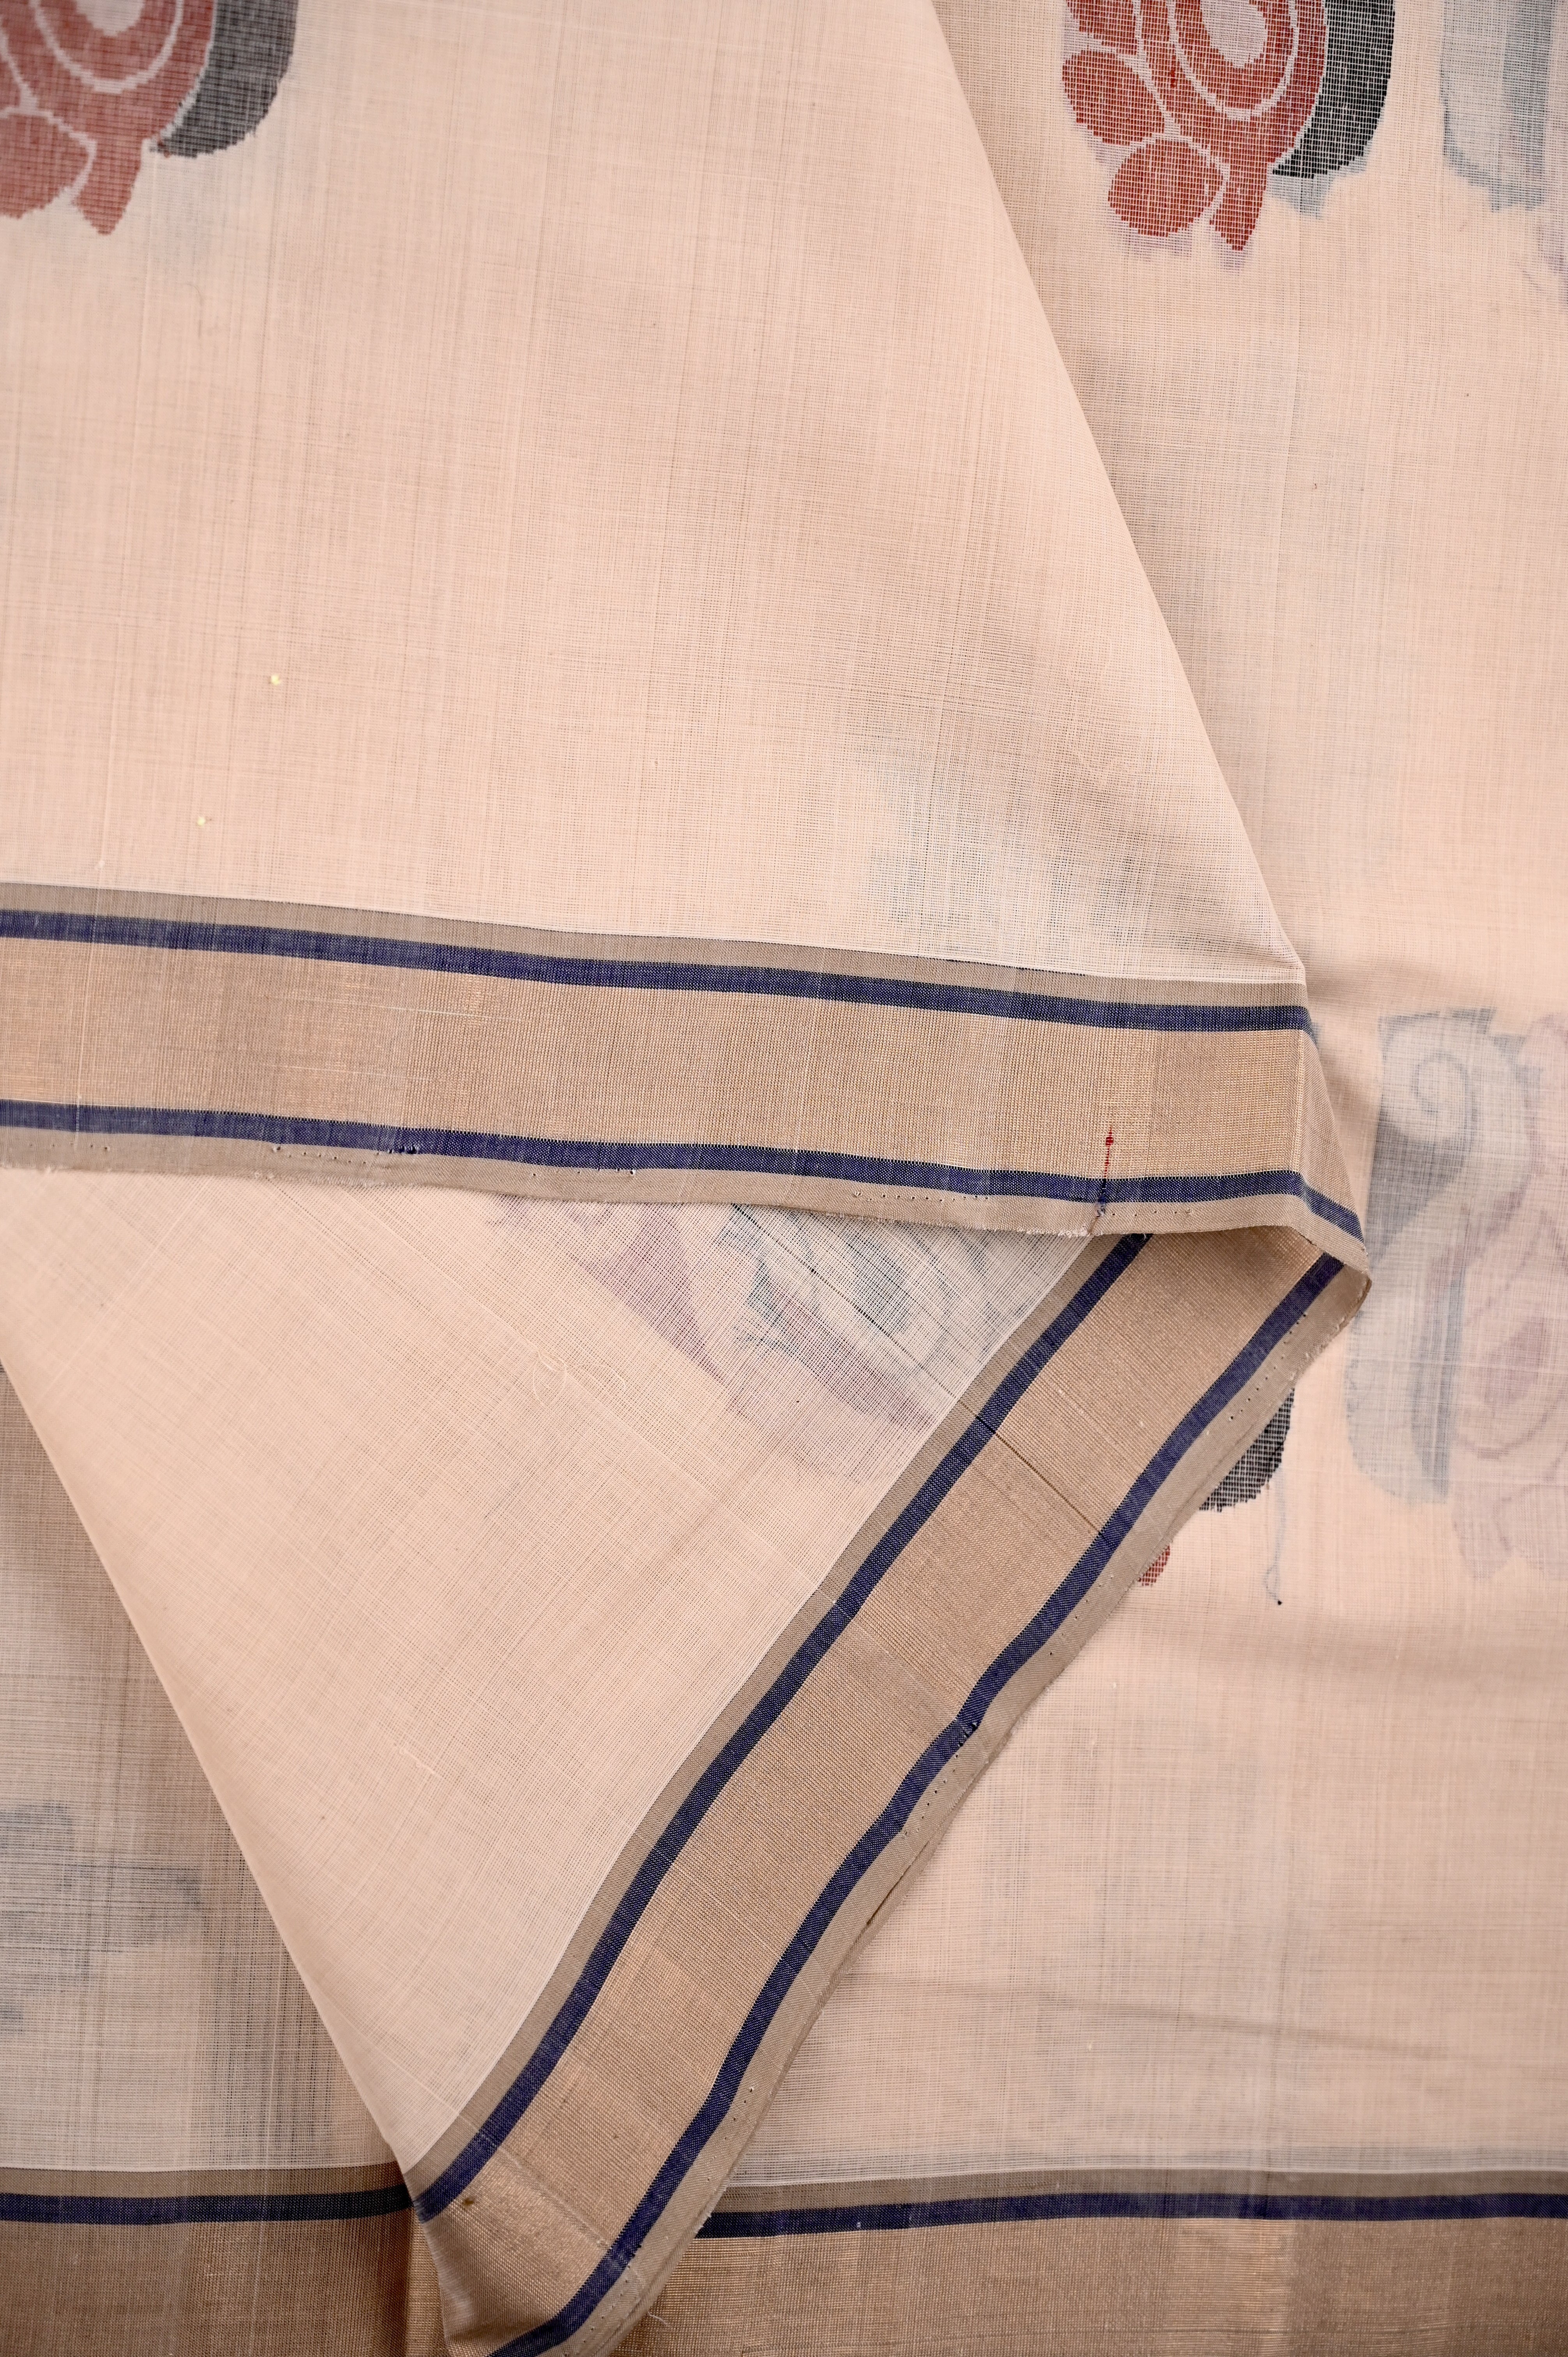 Kanchi cotton saree cream color with thread motive weaves, small zari border, contrast pallu and plain blouse.